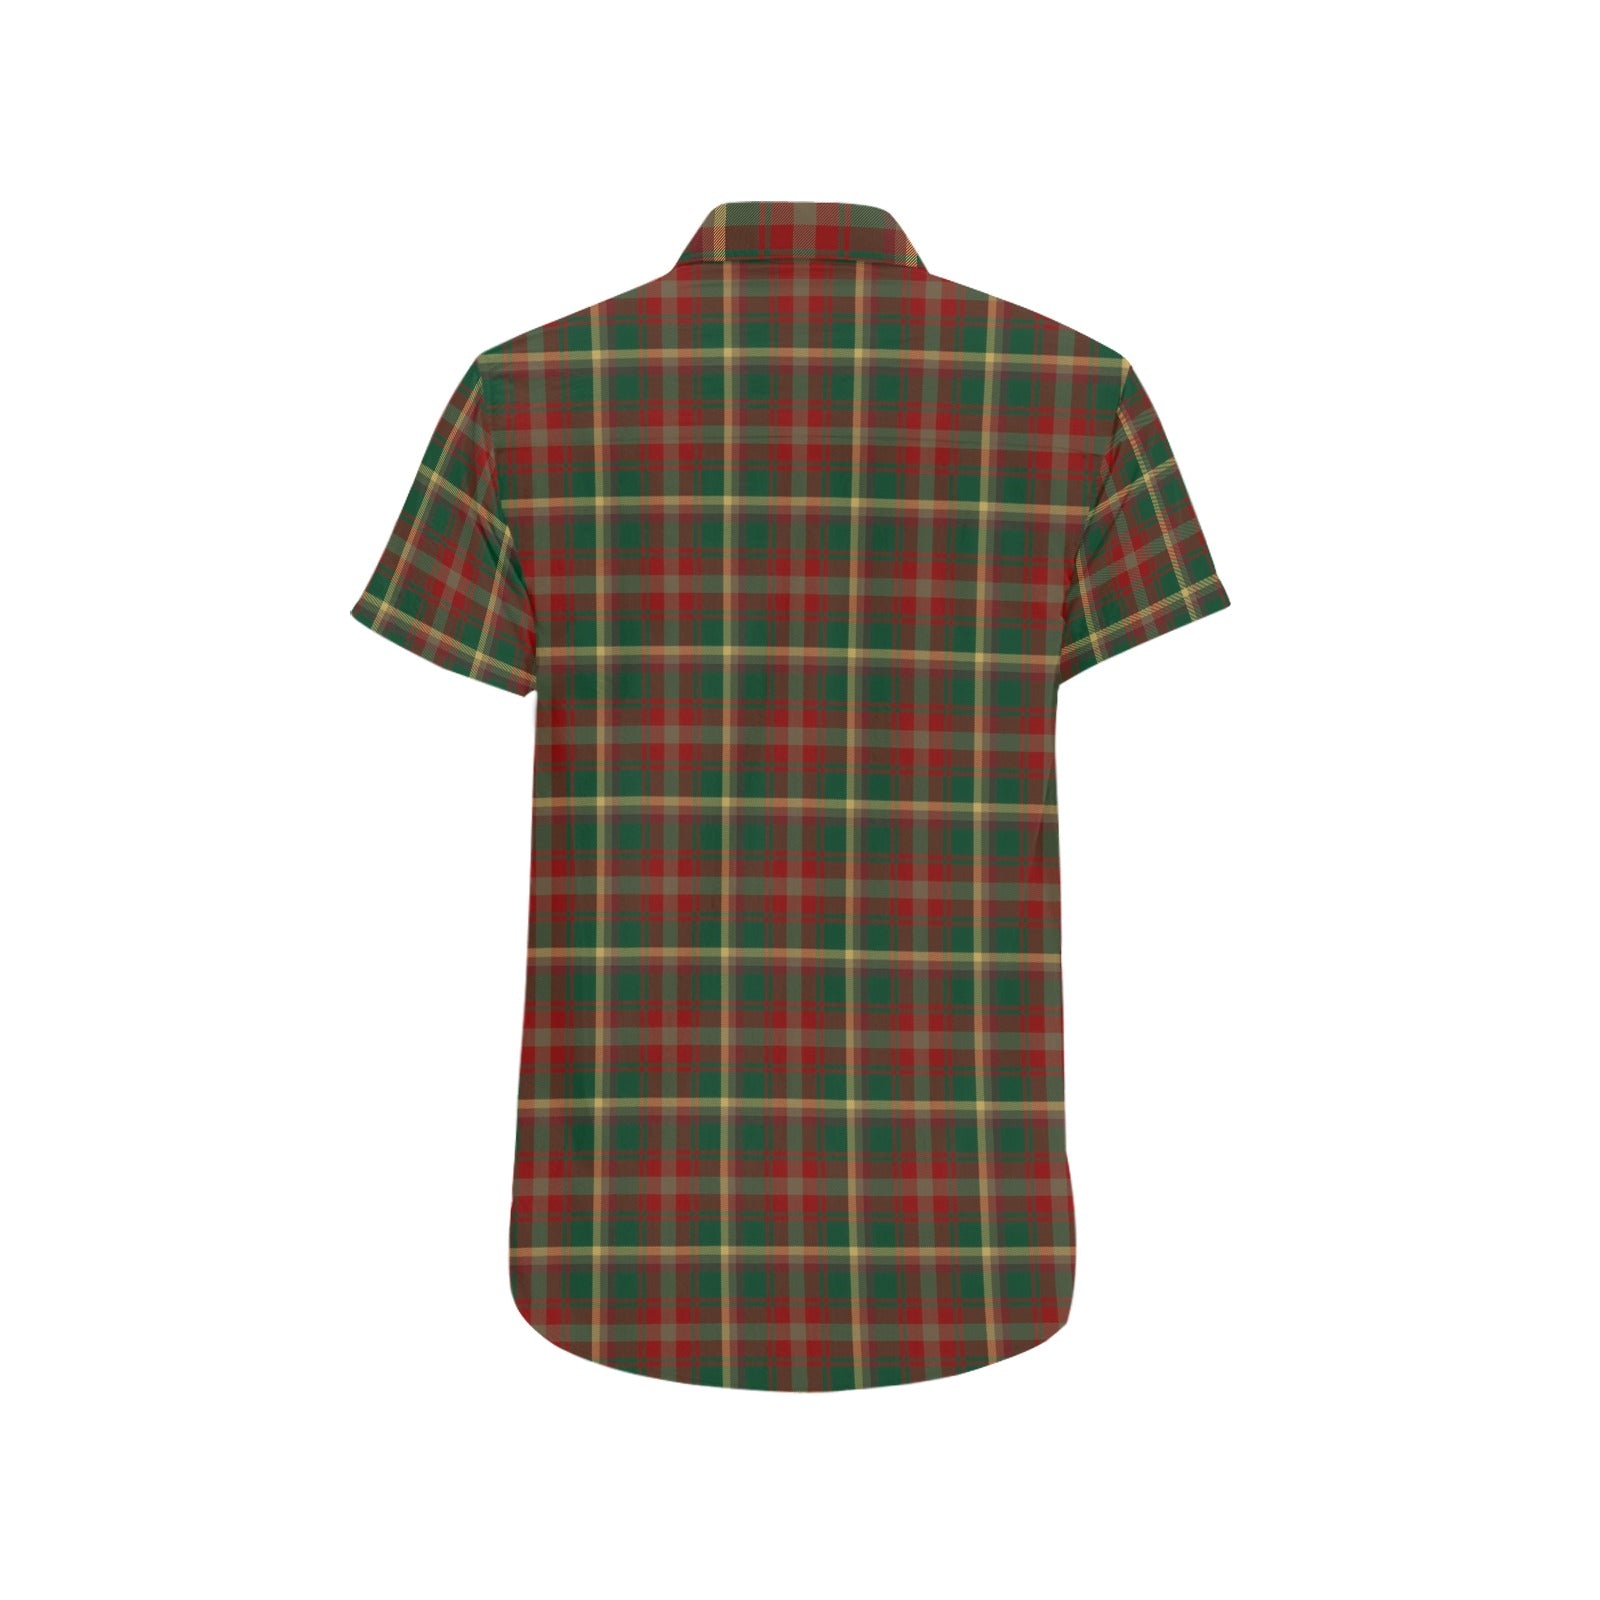 Maple Leaf Tartan Men's Shirt